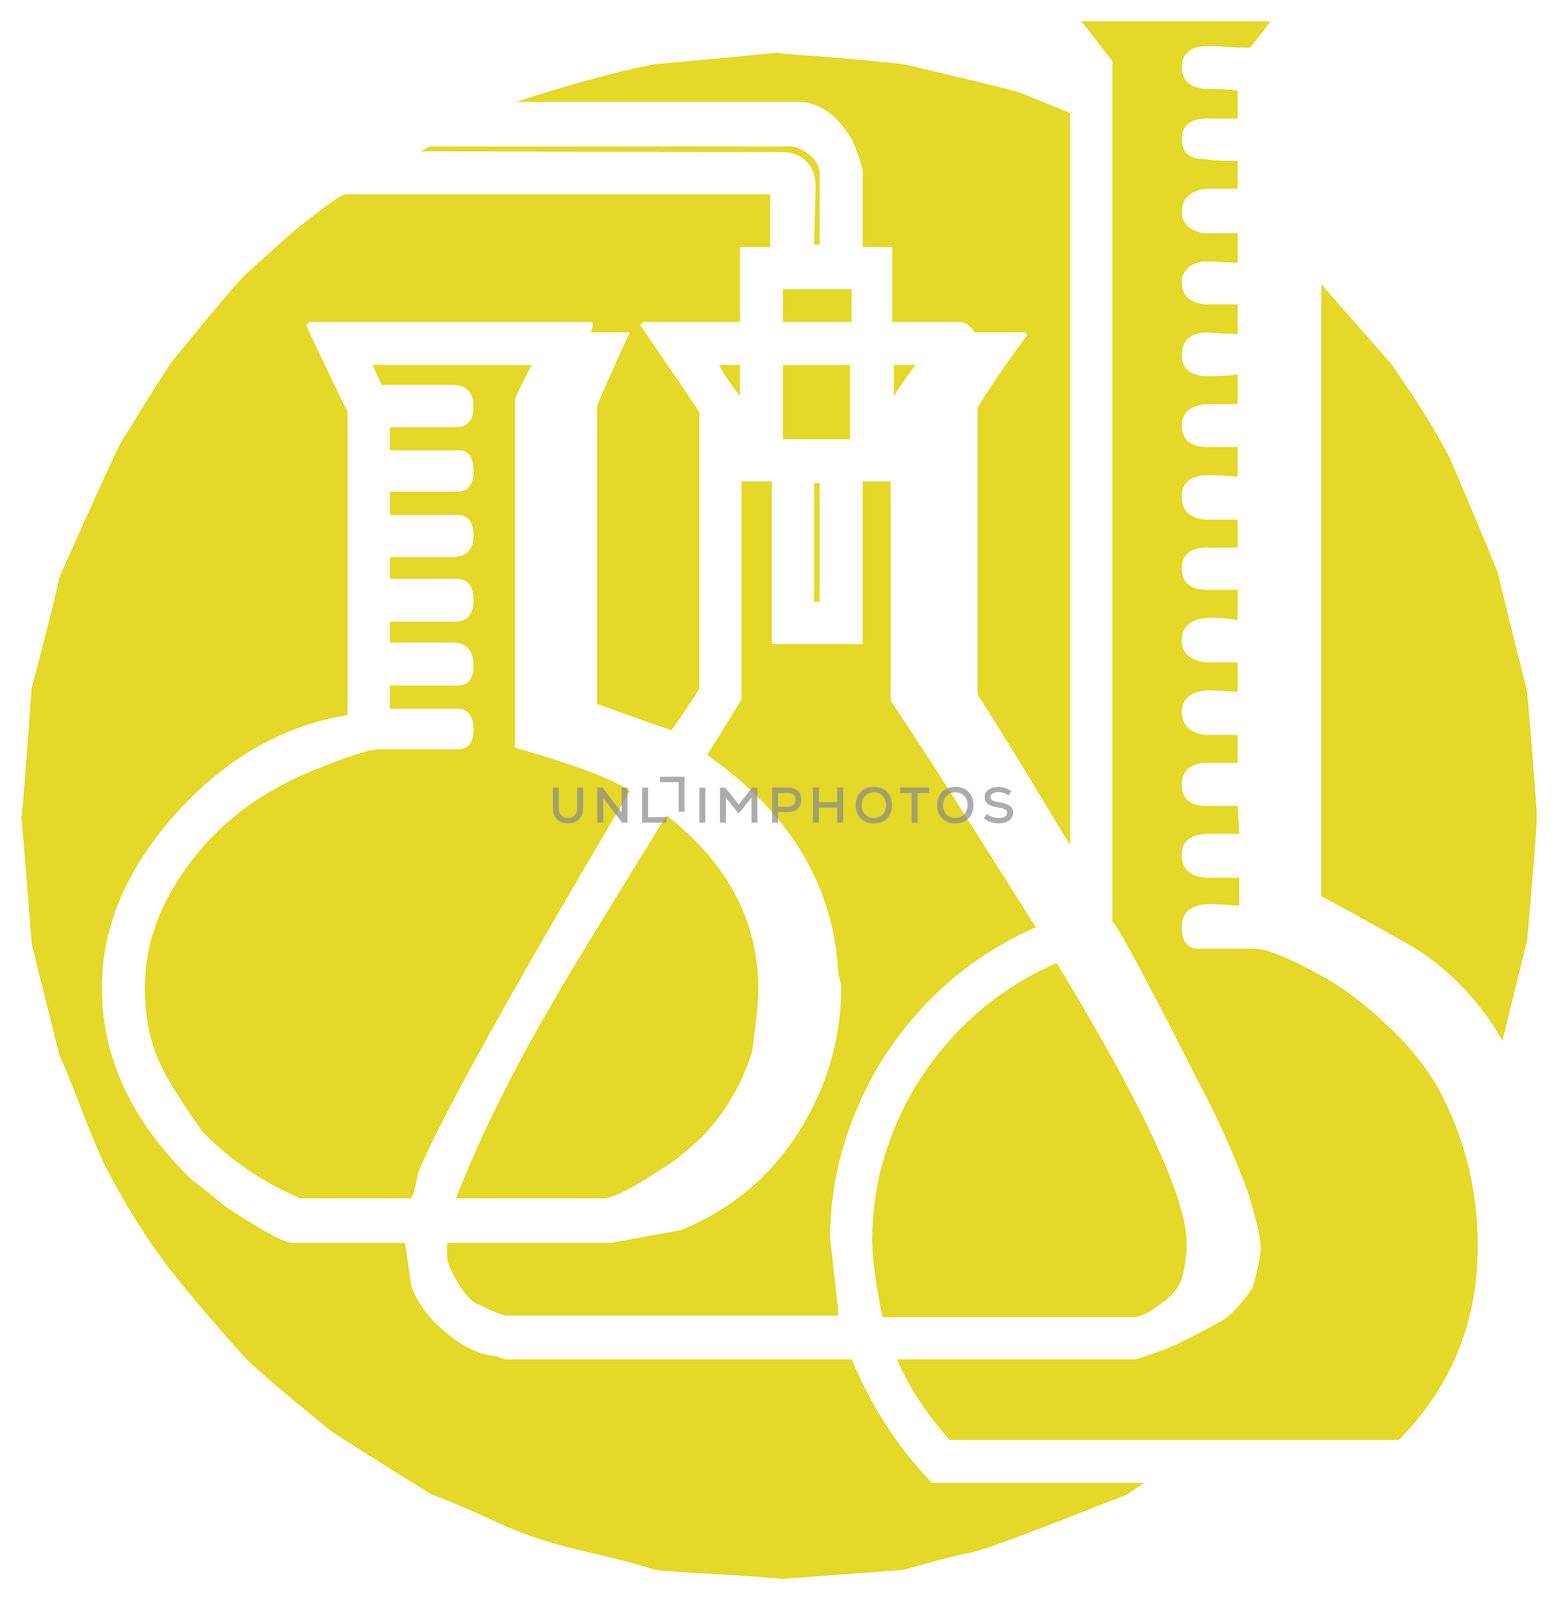 view of laboratory equipments - beaker, test tube, funnel